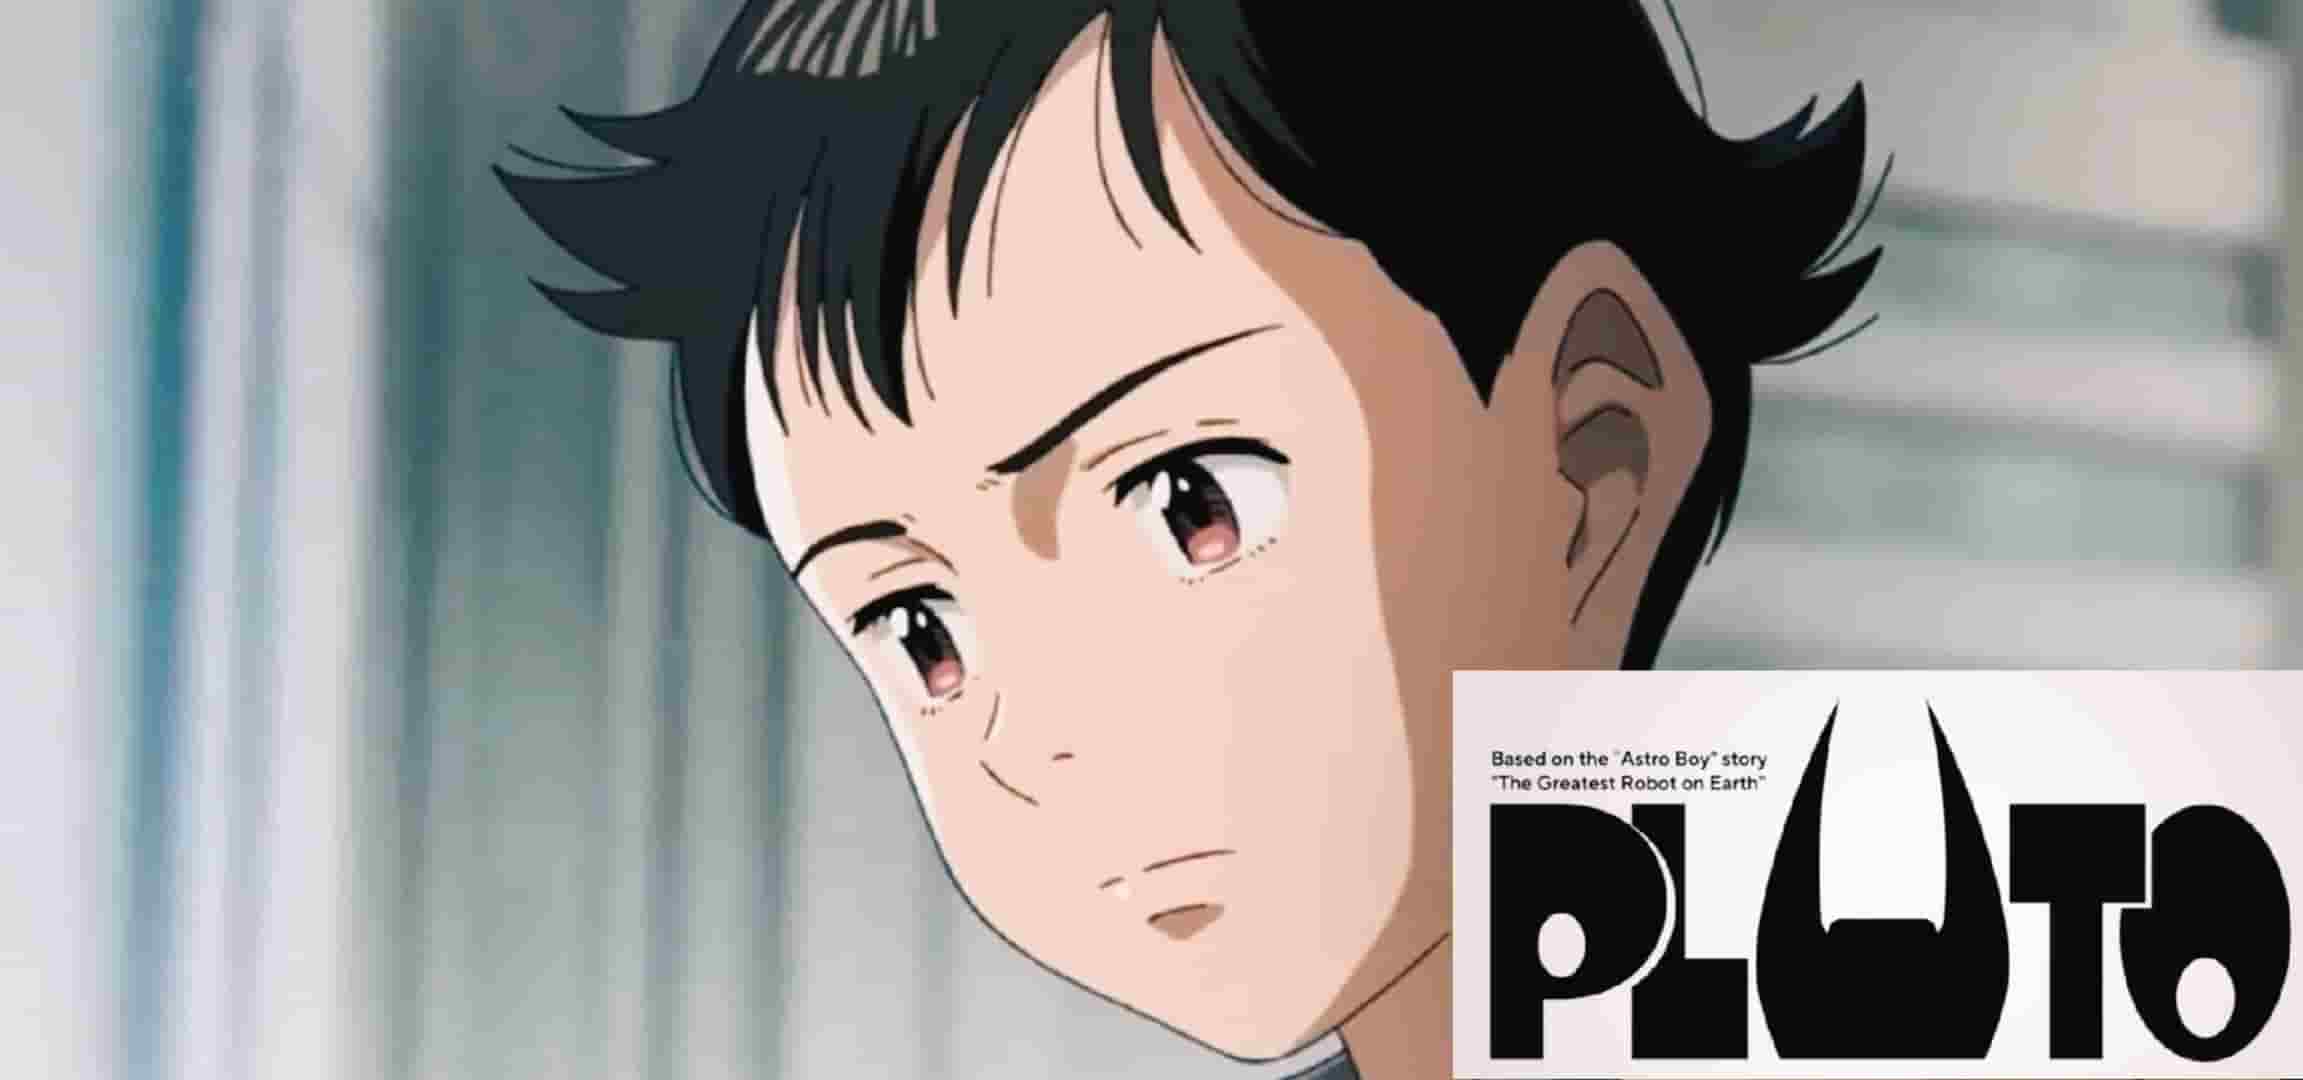 Naoki Urasawa's Pluto is one of the best sci-fi manga stories ever